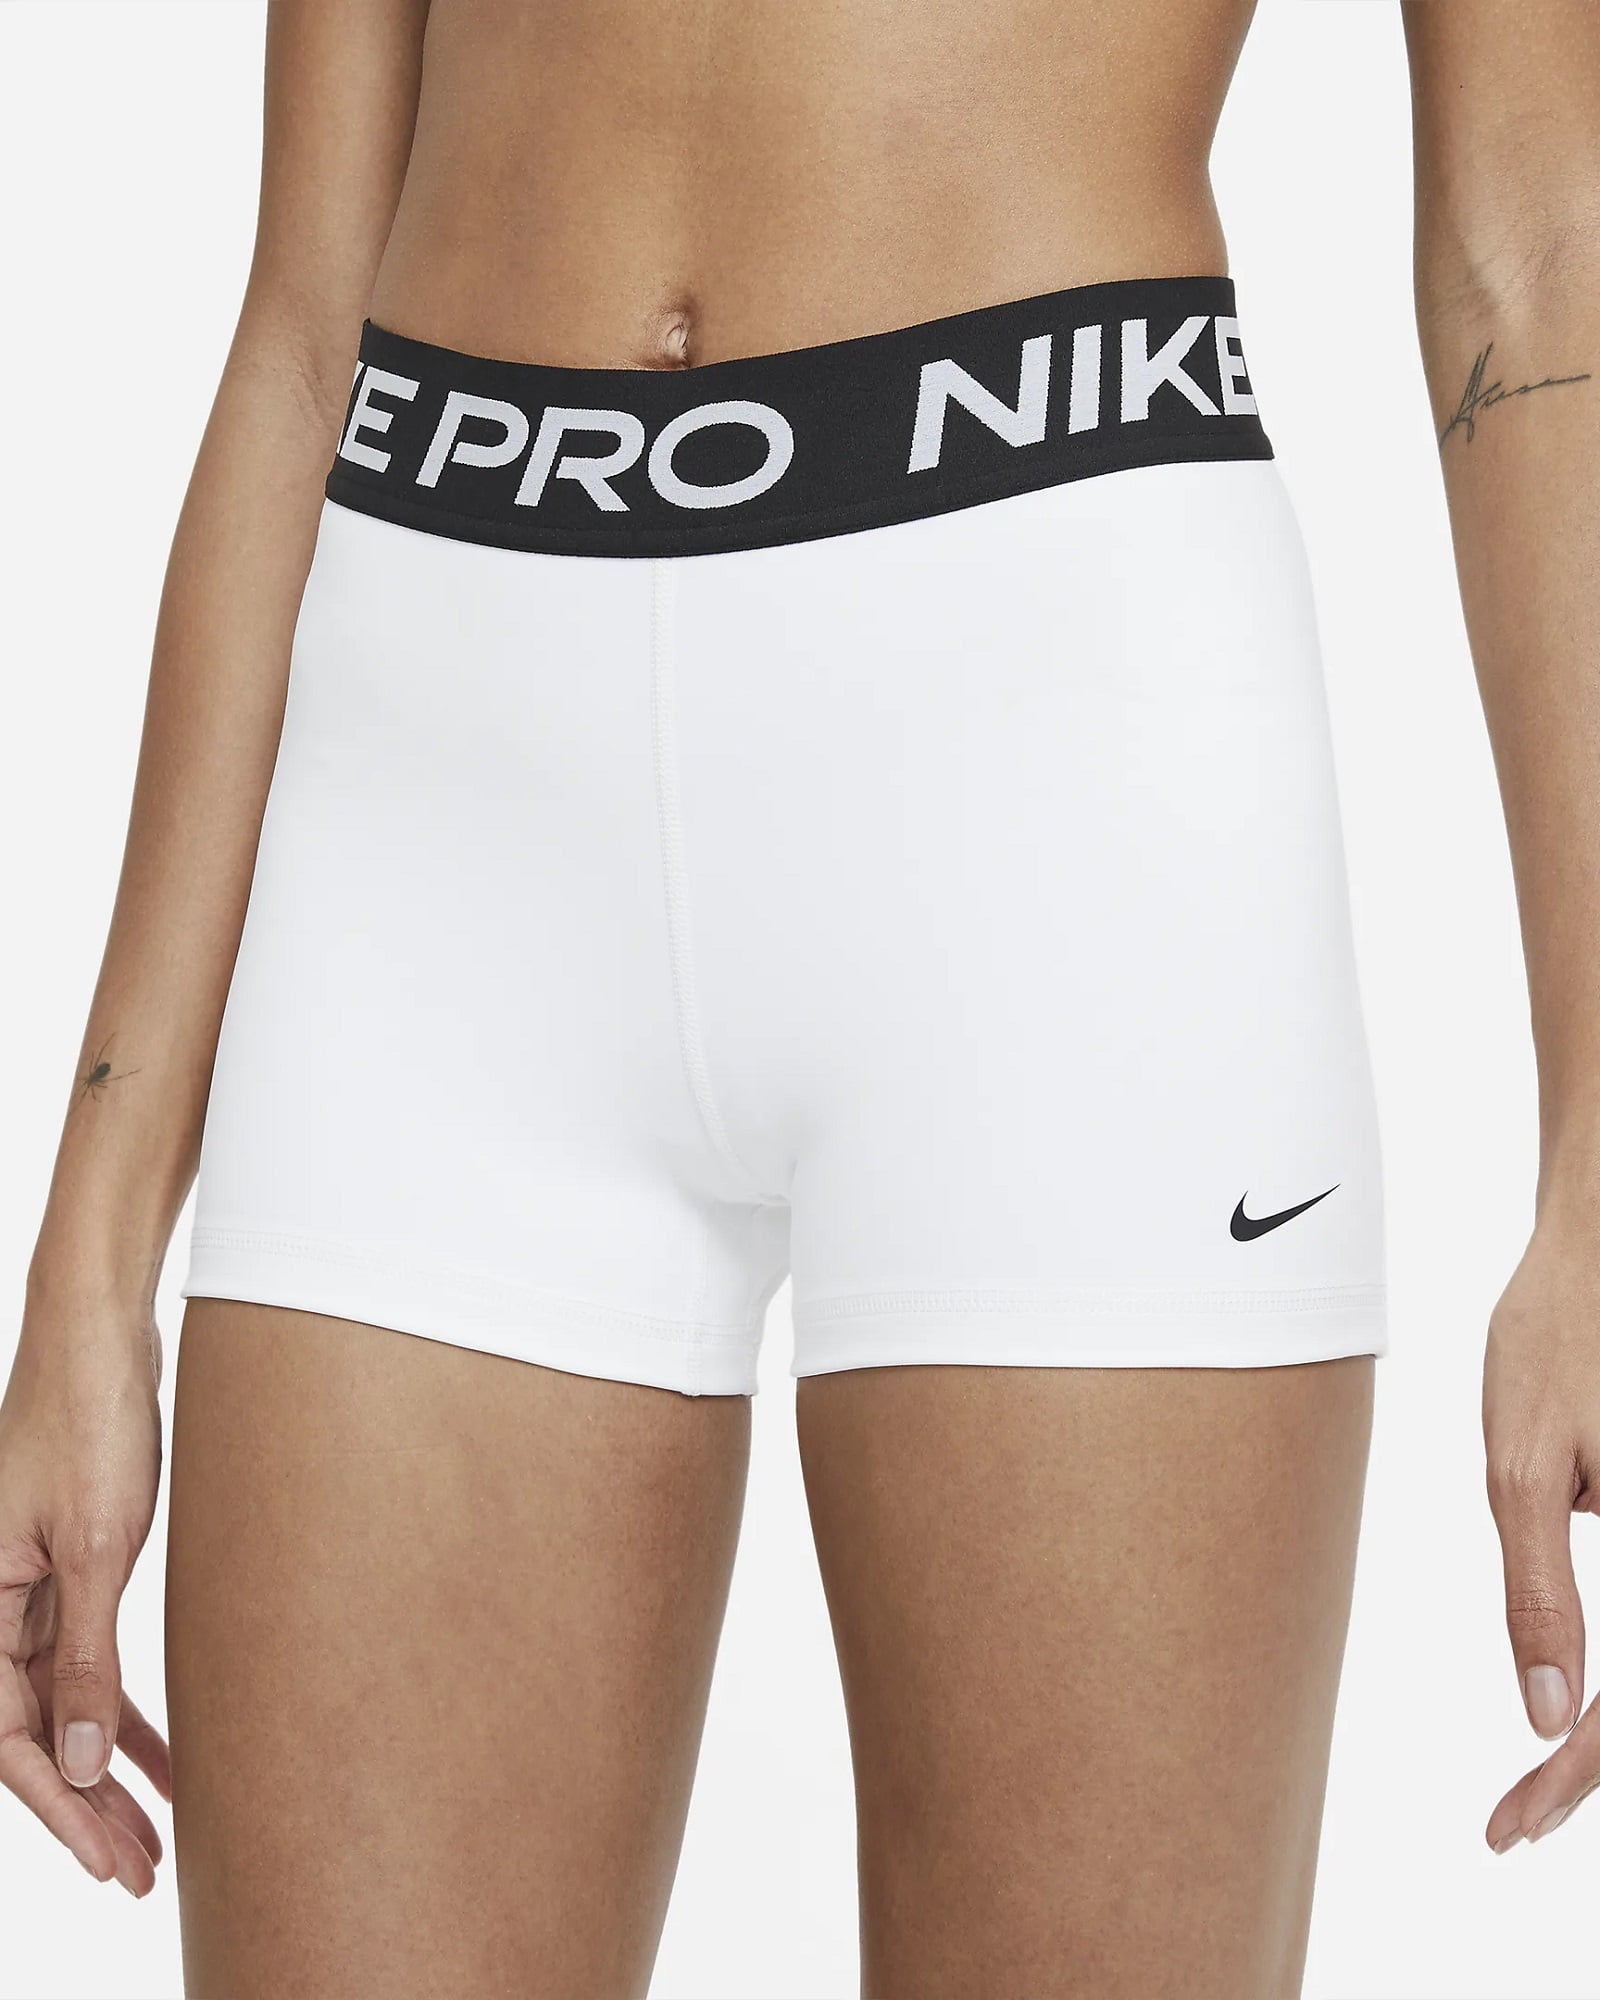 Sømand Furnace Supermarked Nike Womens Pro 3" Shorts (White/Black/Black, Large) - Walmart.com